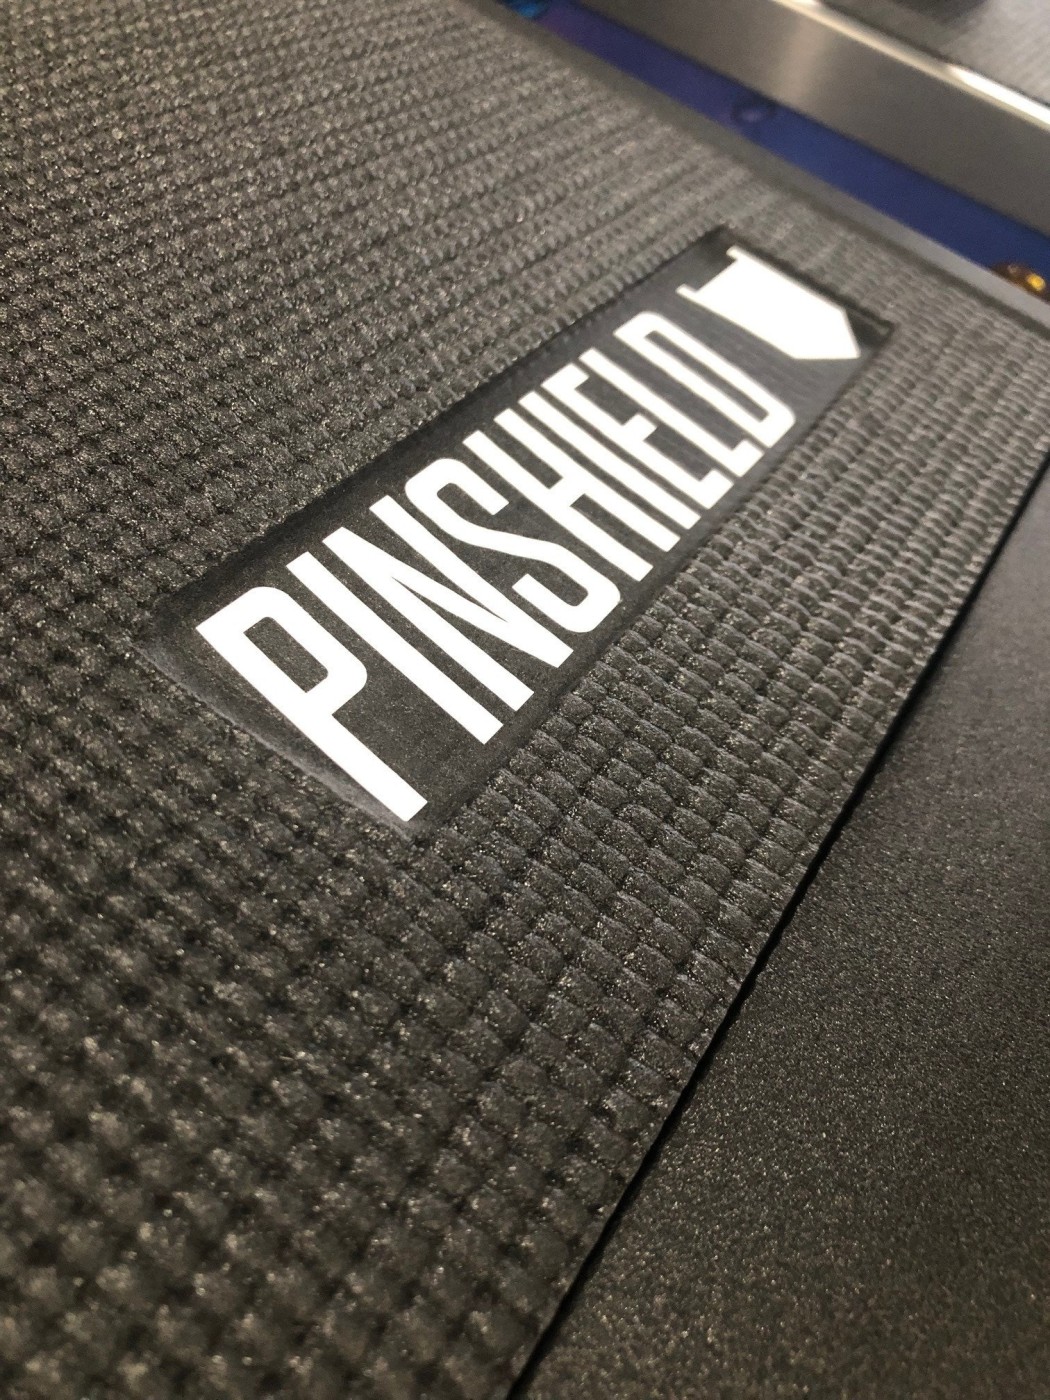 PinShield dust cover - Pinball Heaven